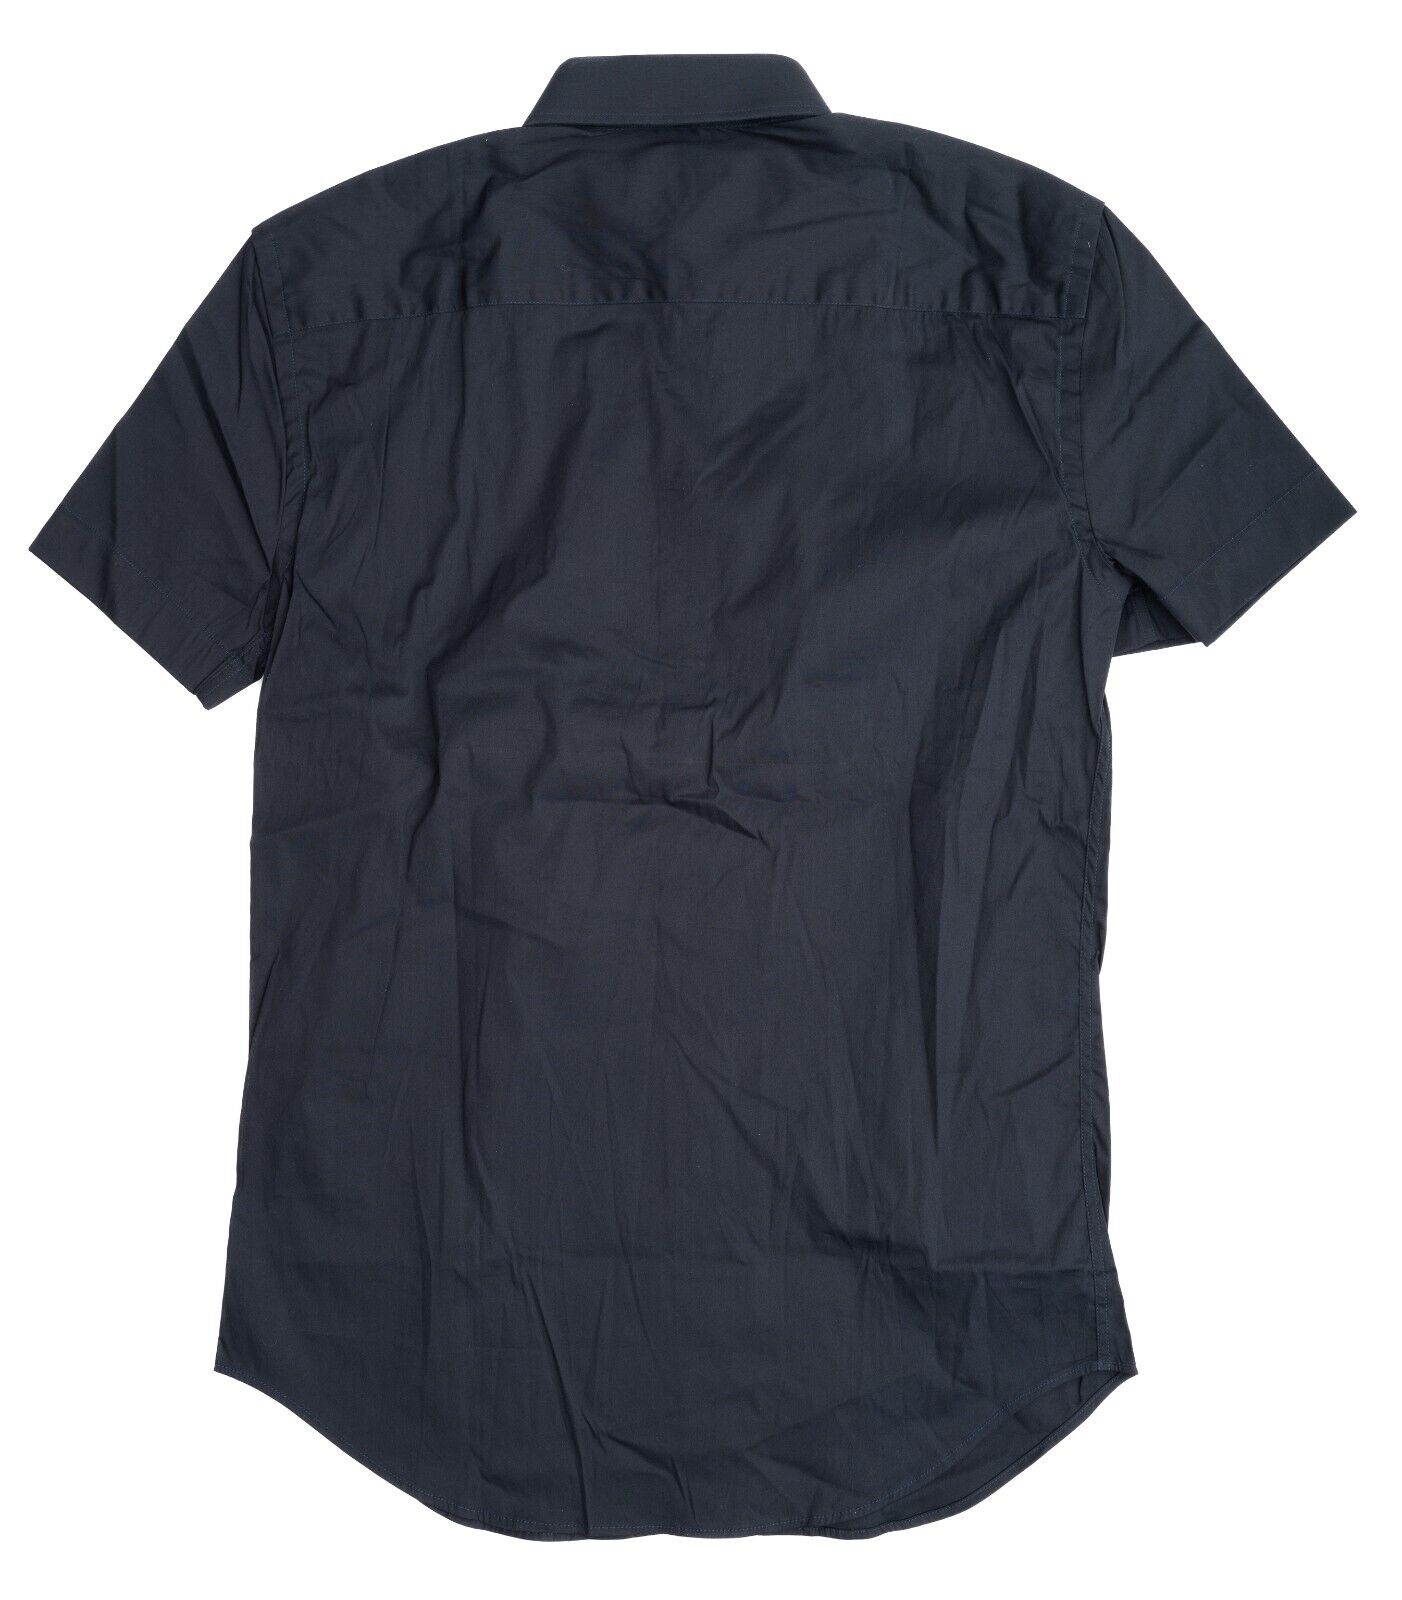 EMPORIO ARMANI Navy Blue Cotton Dress Shirt Short Sleeve Slim Fit 15 1/2 39 Emporio Armani - фотография #6